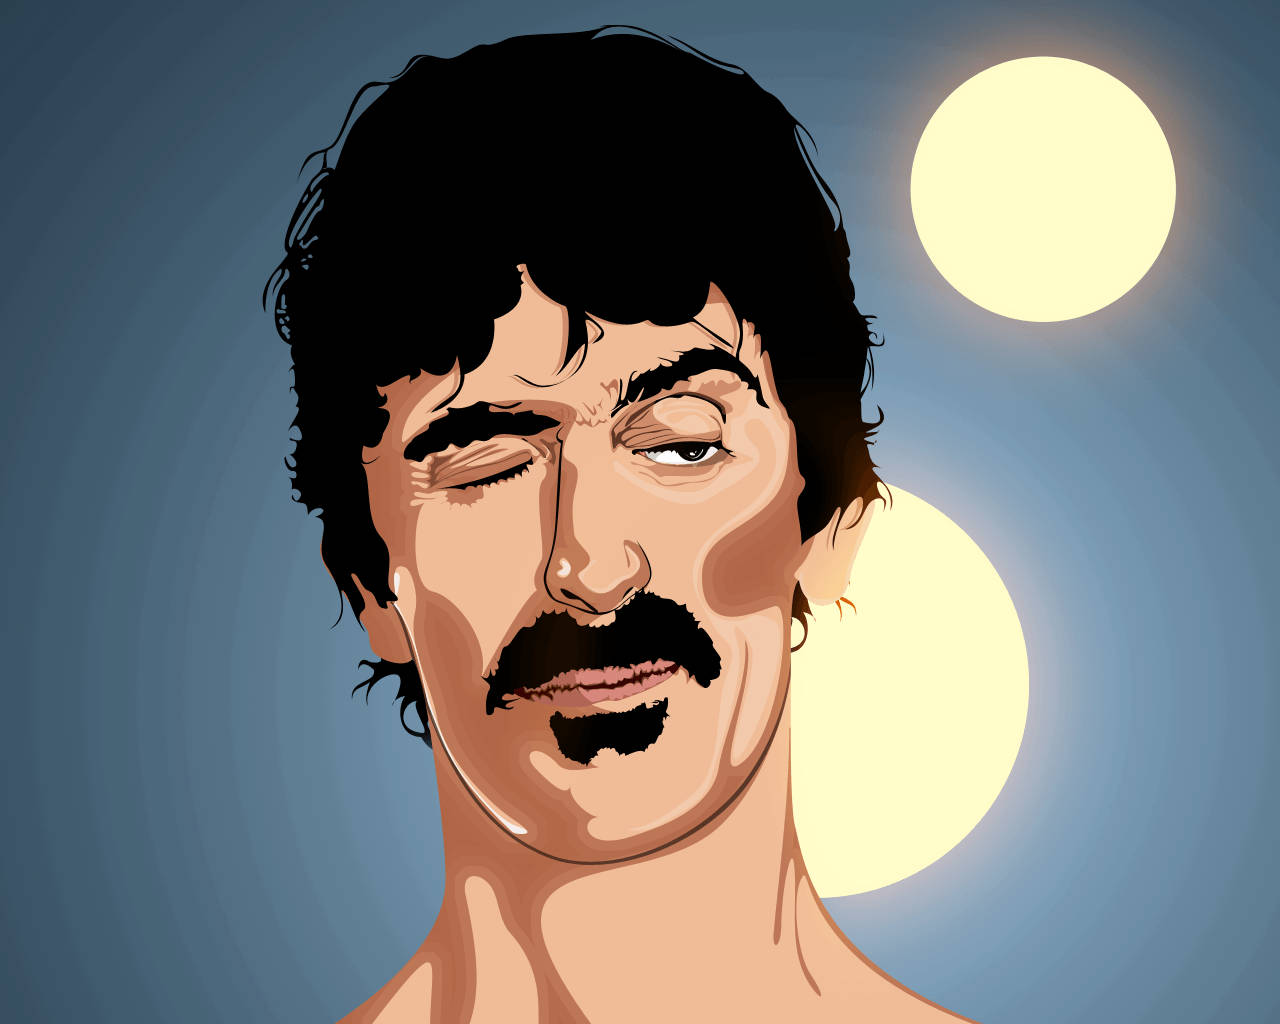 Frank Zappa Wink Art Desktop Tapet: Nyd fantastisk grafik med detaljer fra Frank Zappas skæbnevise kunst. Wallpaper